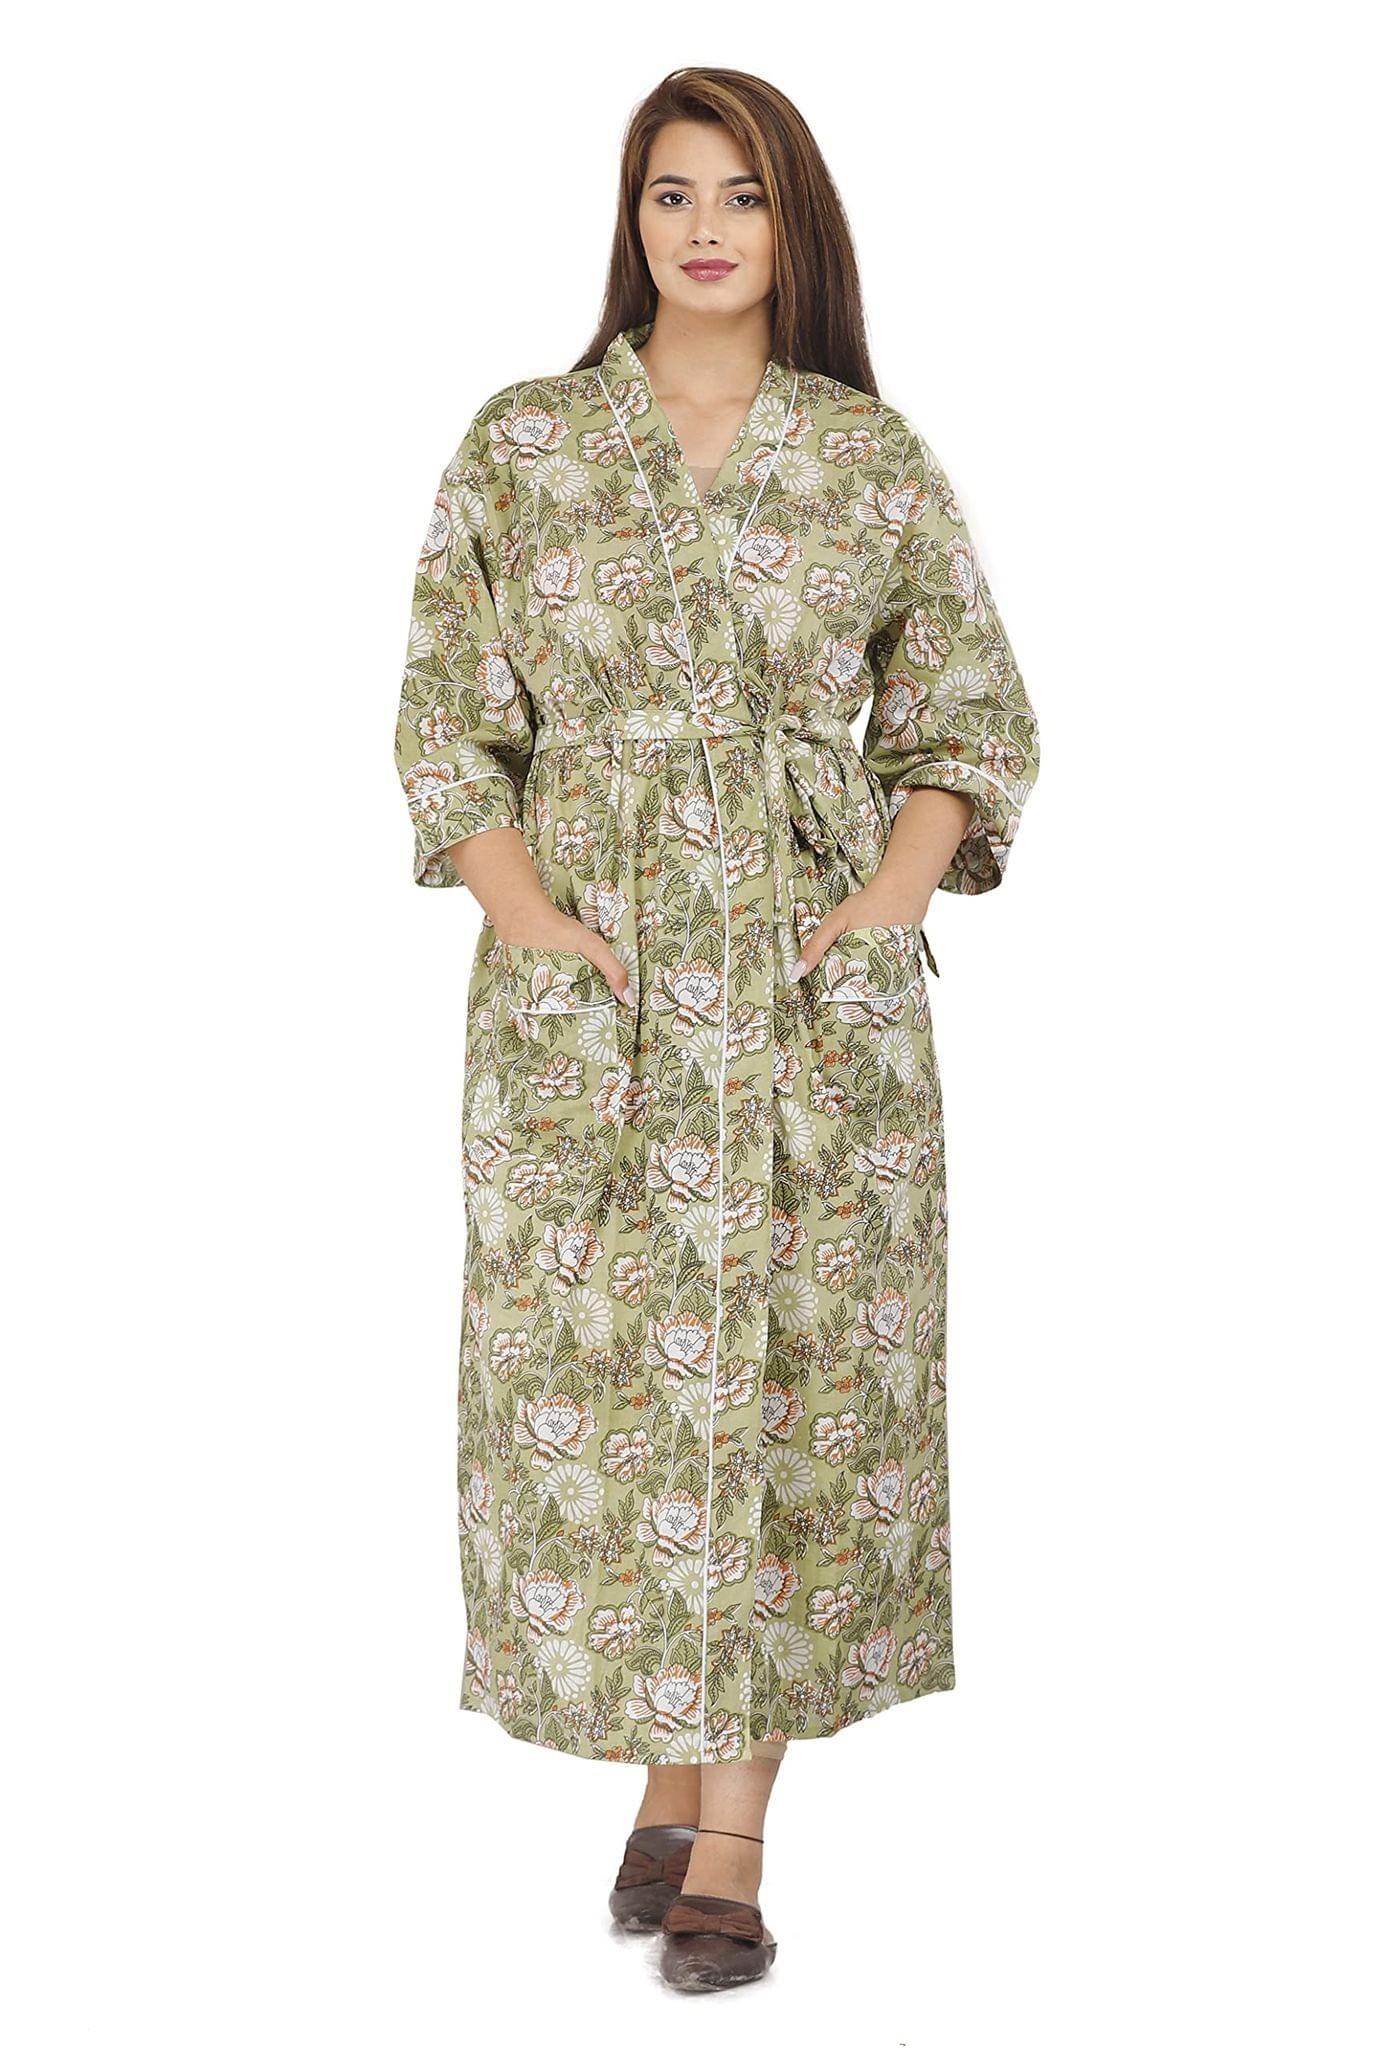 SHOOLIN Floral Pattern Kimono Robe Long Bathrobe For Women ||Women's Cotton Kimono Robe Long - Floral ||3/4 Sleeve And Calf Length Kimono For Women's (Mahendi)